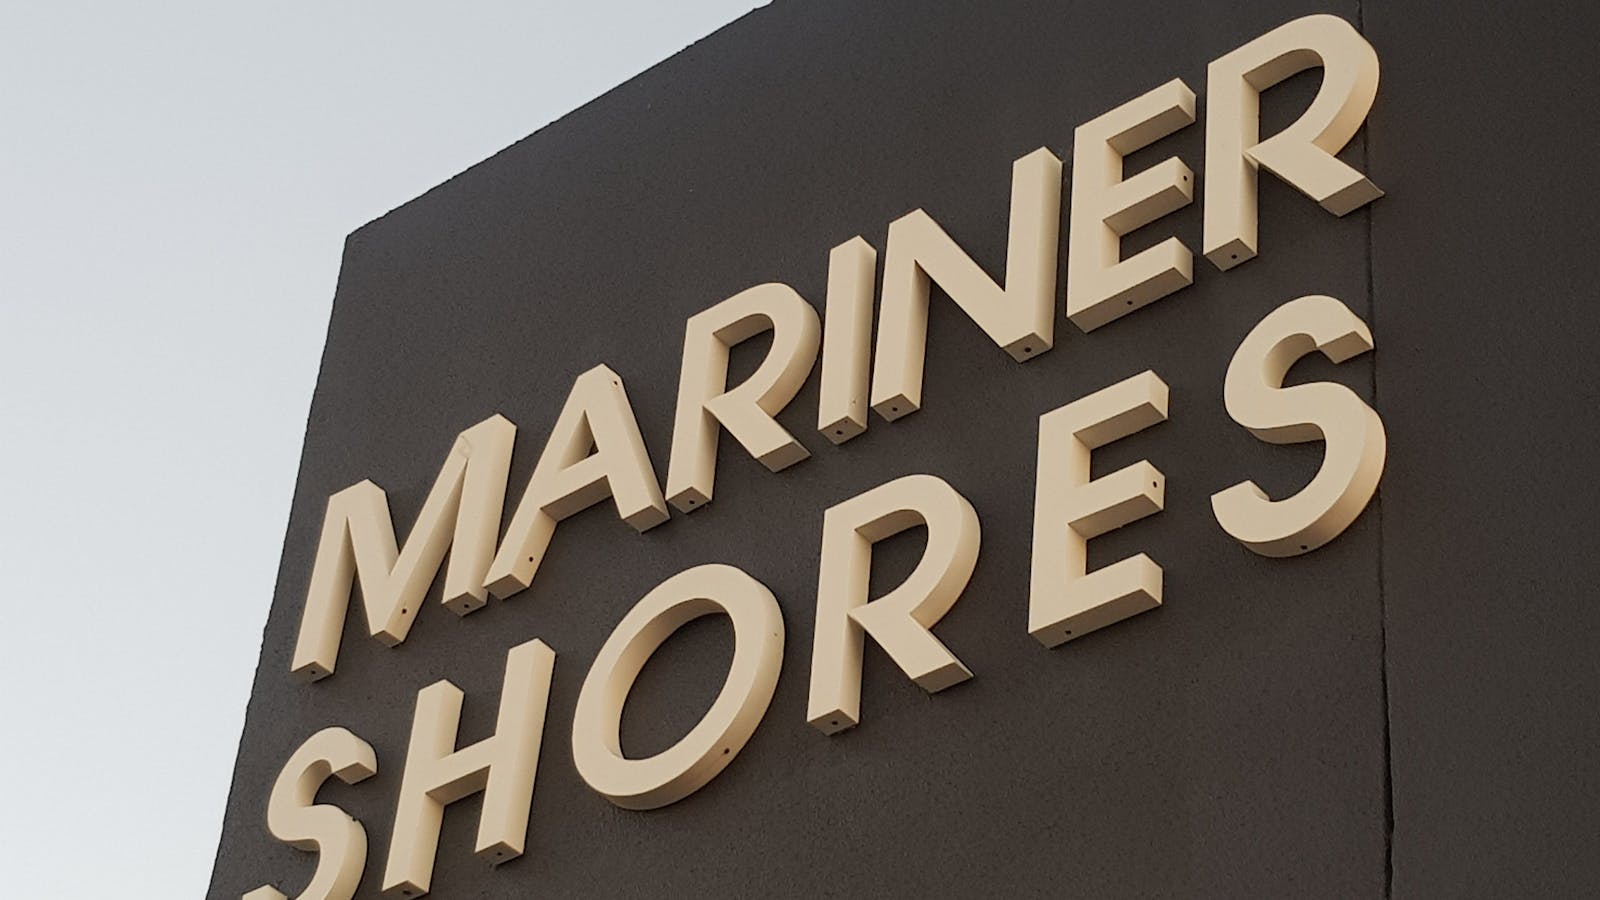 Mariner Shores